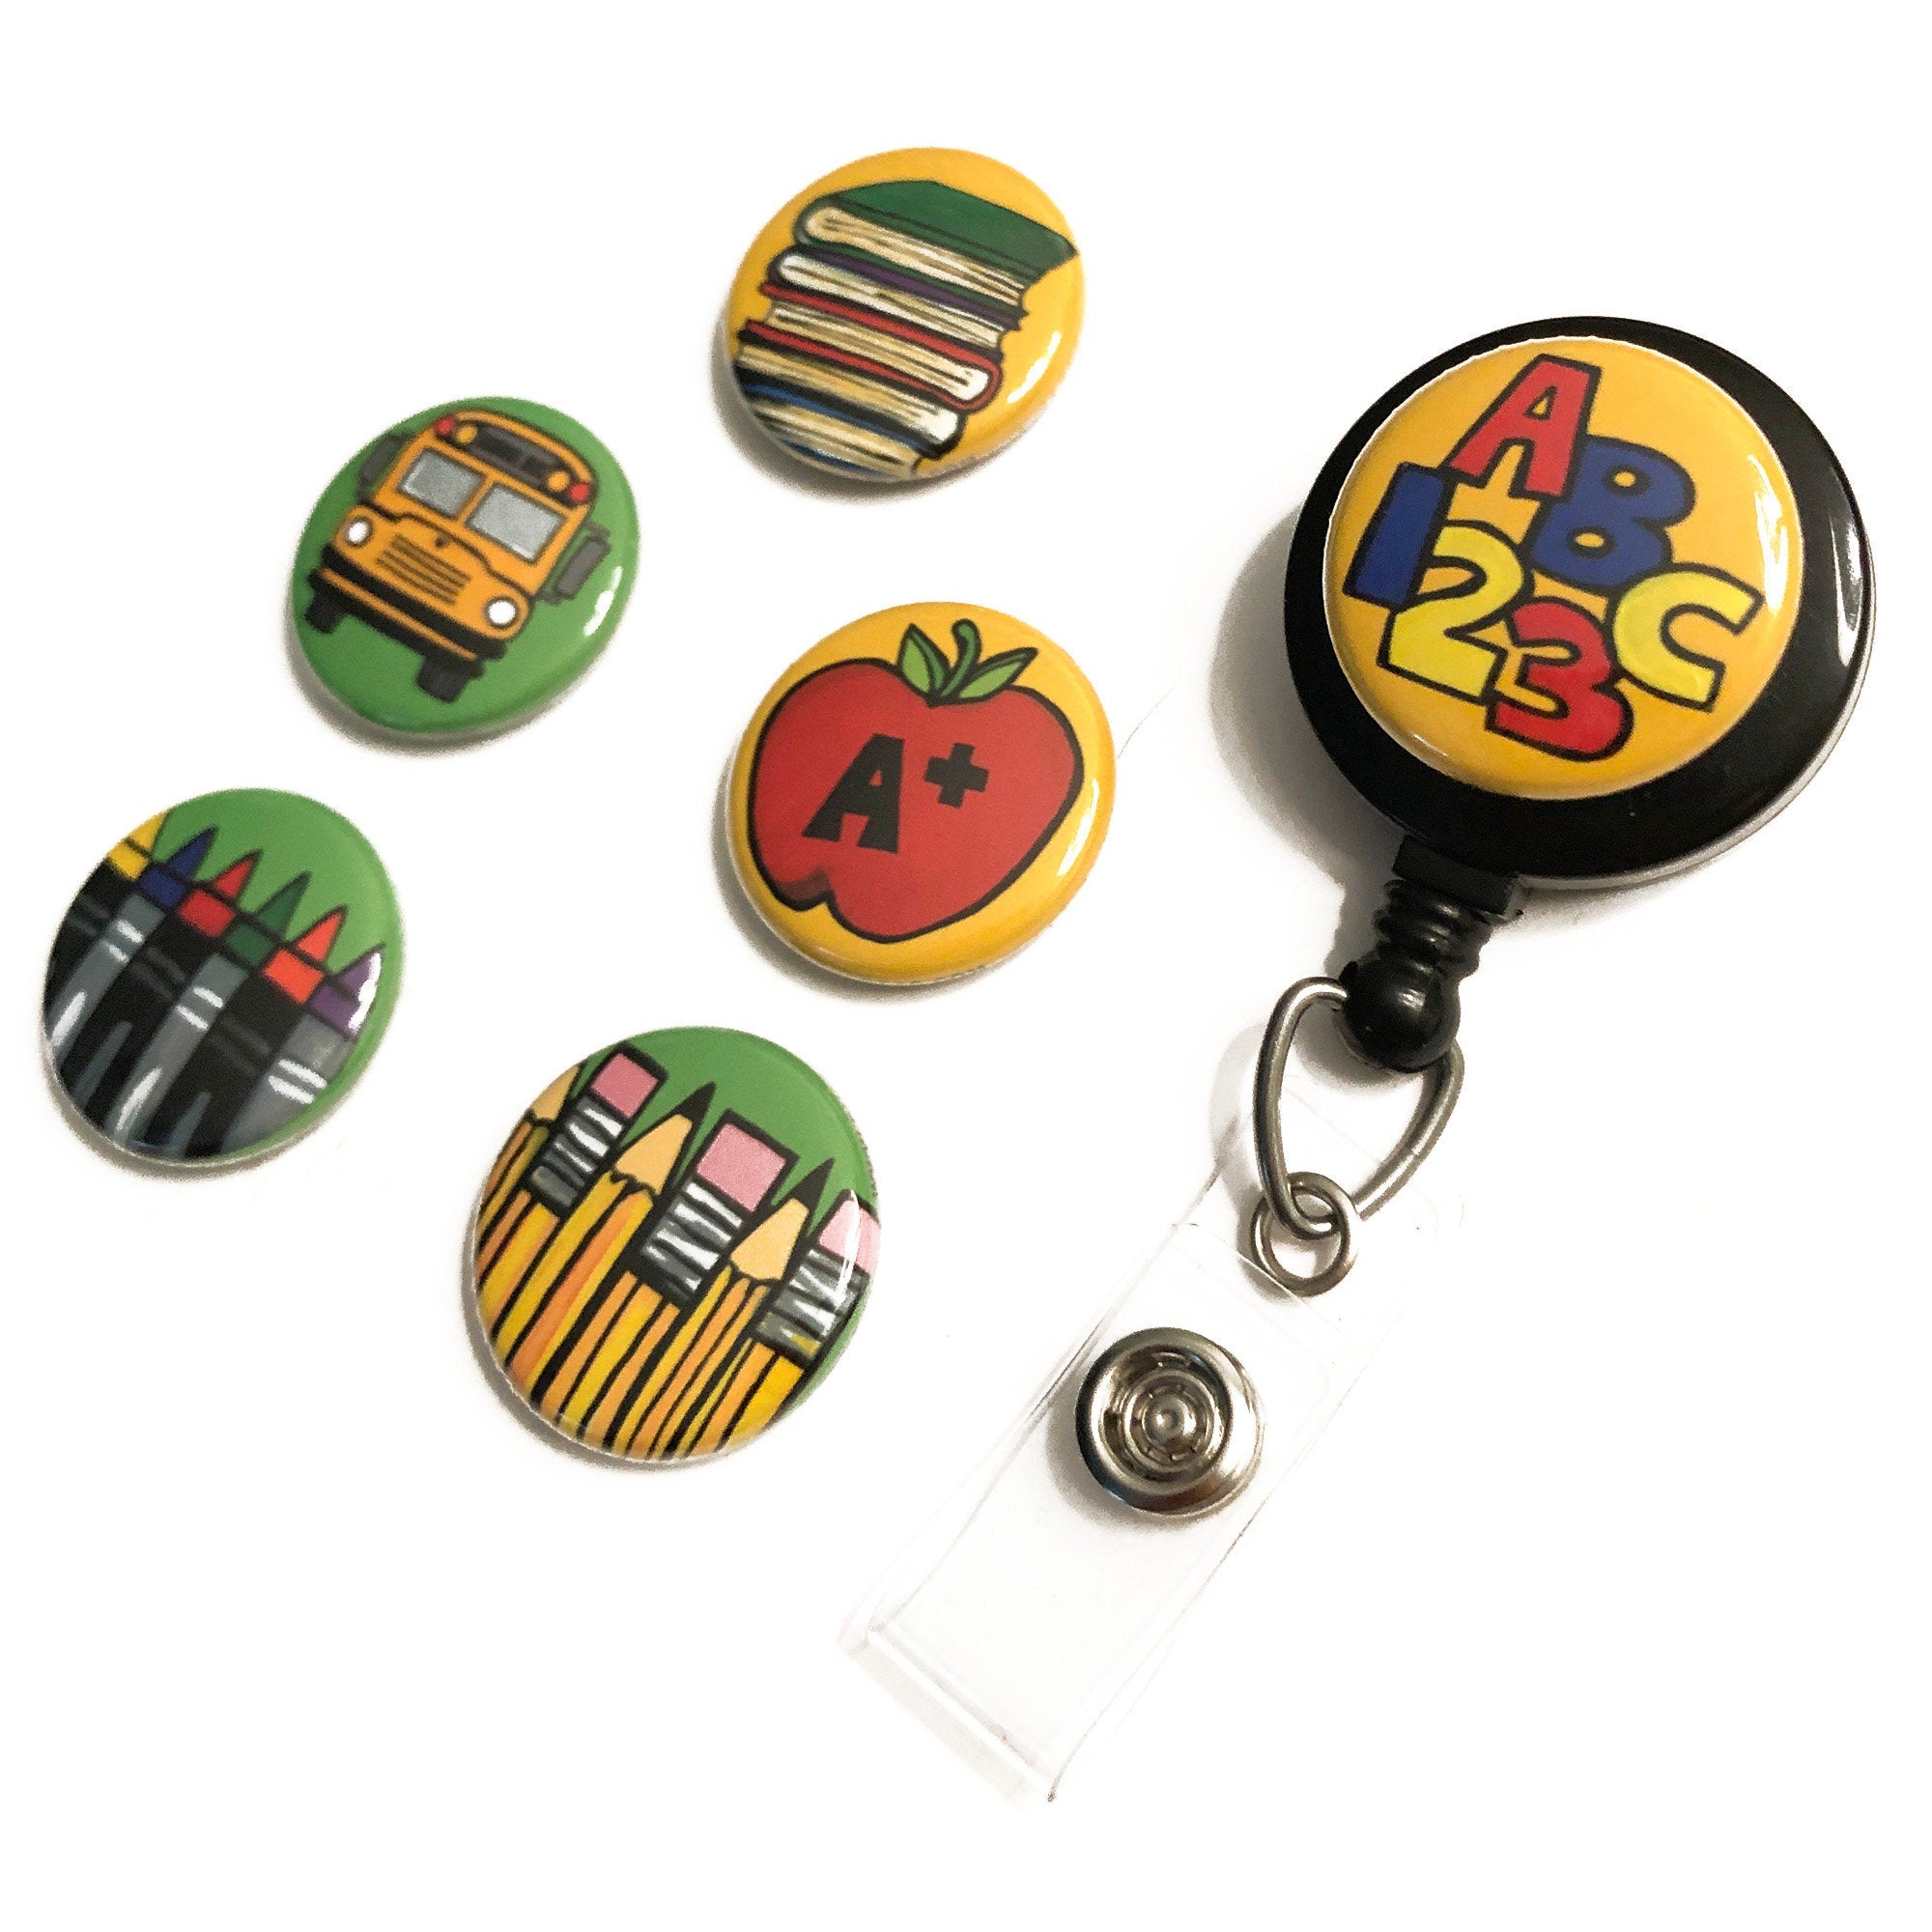 Teacher ID Badge Reel or Lanyard - Interchangeable ID badge holder with 6 magnets - School Teacher Gift, Back to School - Retractable Badge